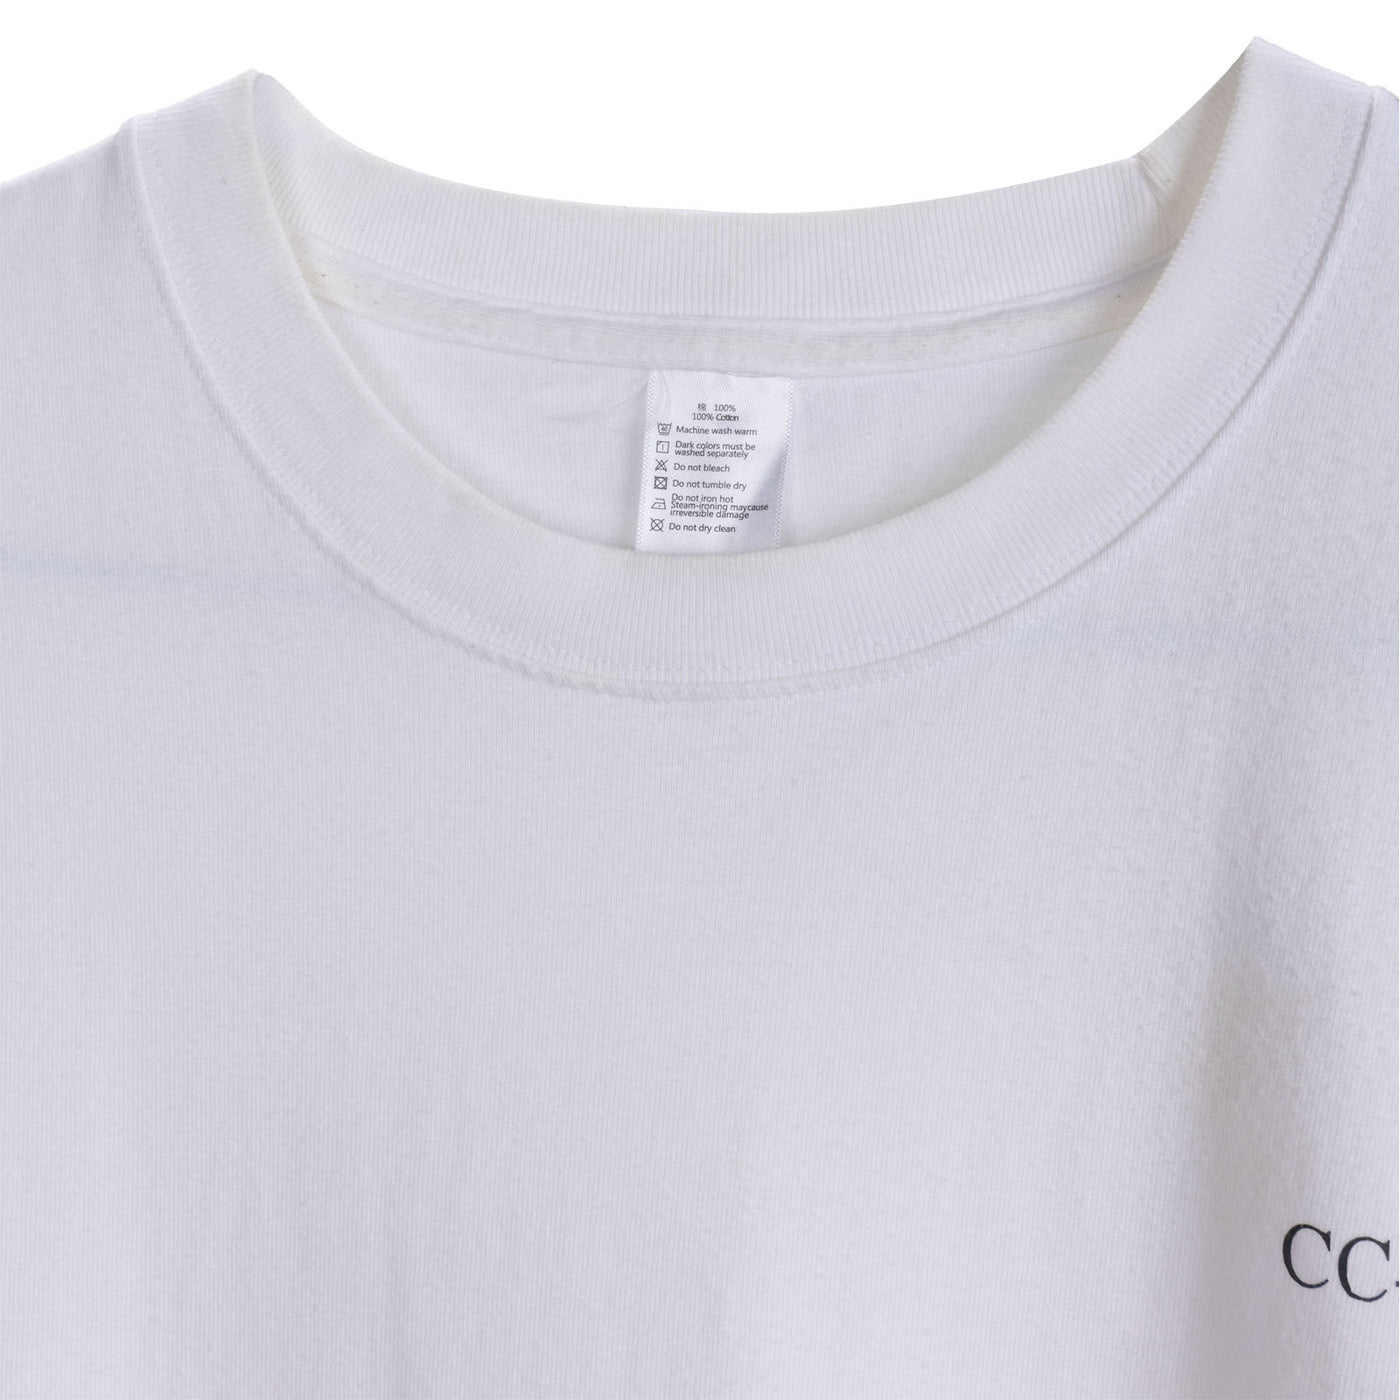 CC-Los Men's T-Shirt Lightweight Crewneck Tee Shirts for Men,Cotton Tee Undershirts-White